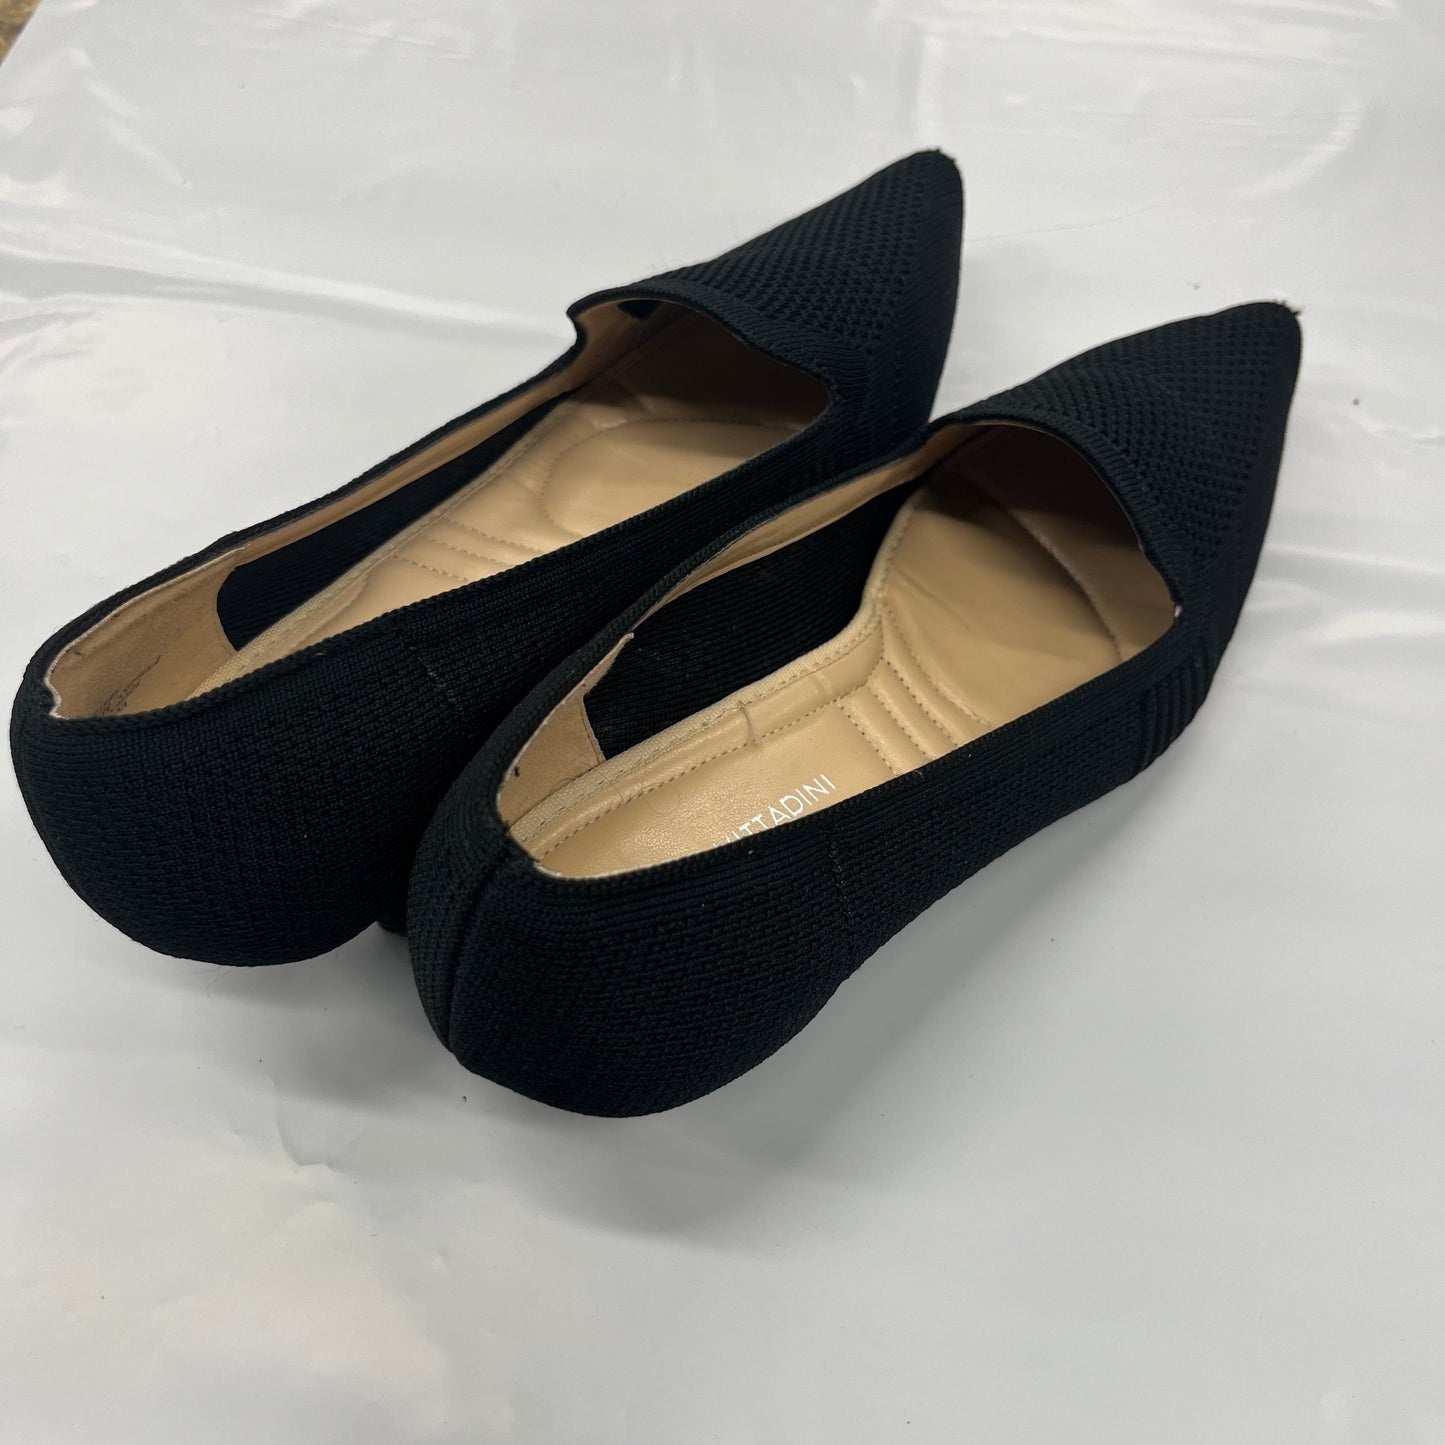 Black Shoes Heels Stiletto Adrienne Vittadini, Size 9.5